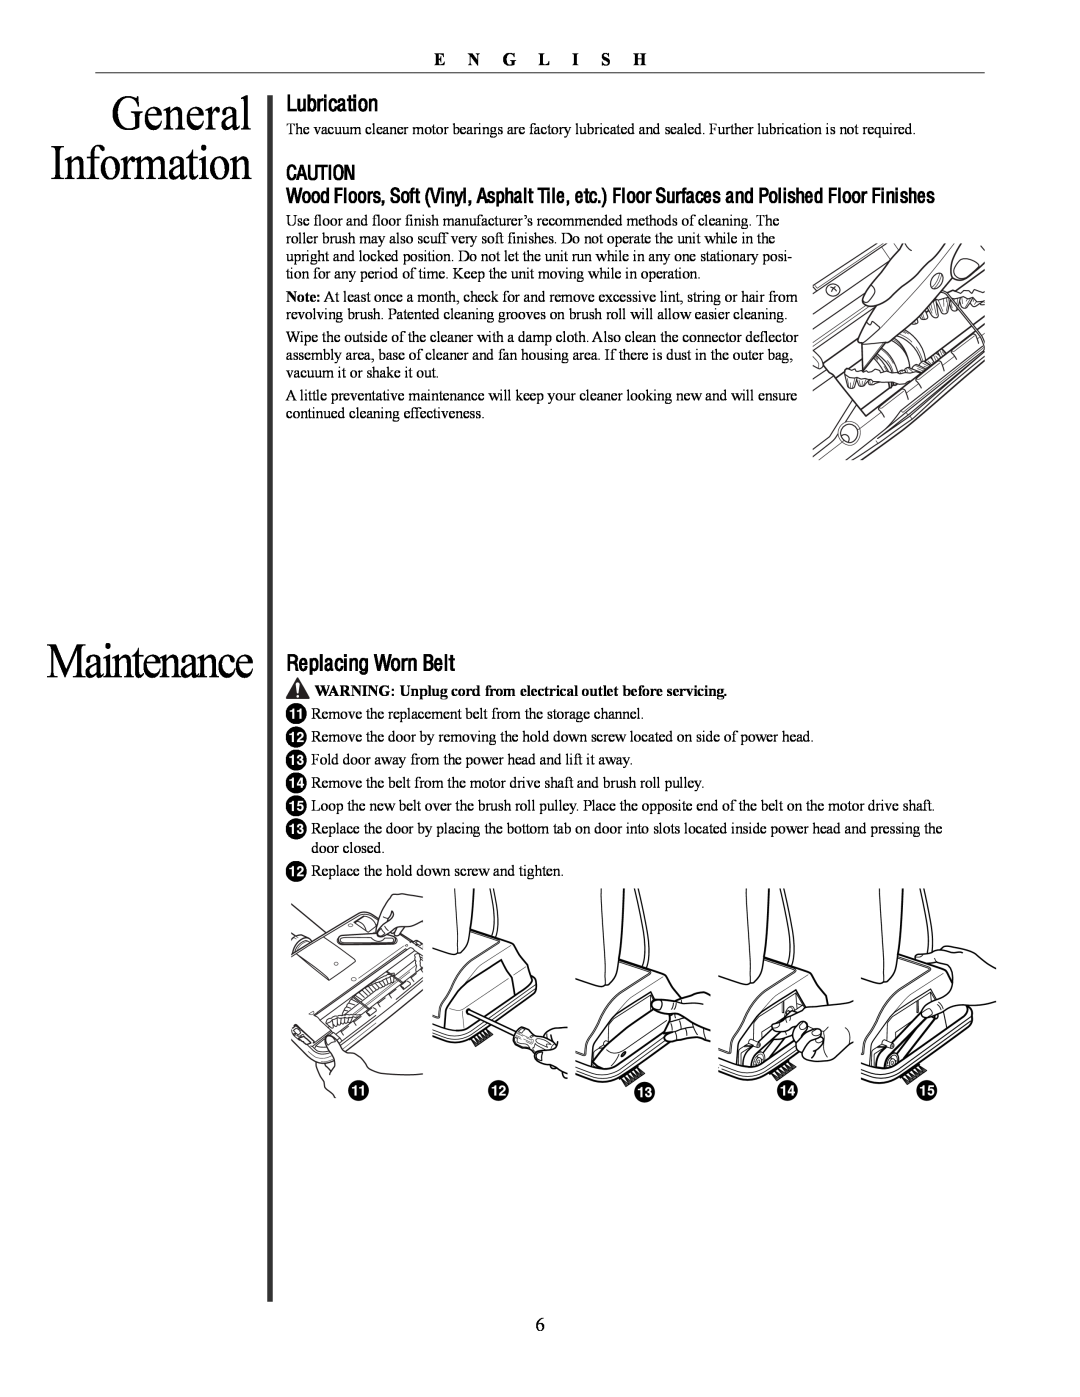 Oreck U4300 manual Maintenance, General Information, Lubrication, Replacing Worn Belt, E N G L I S H 